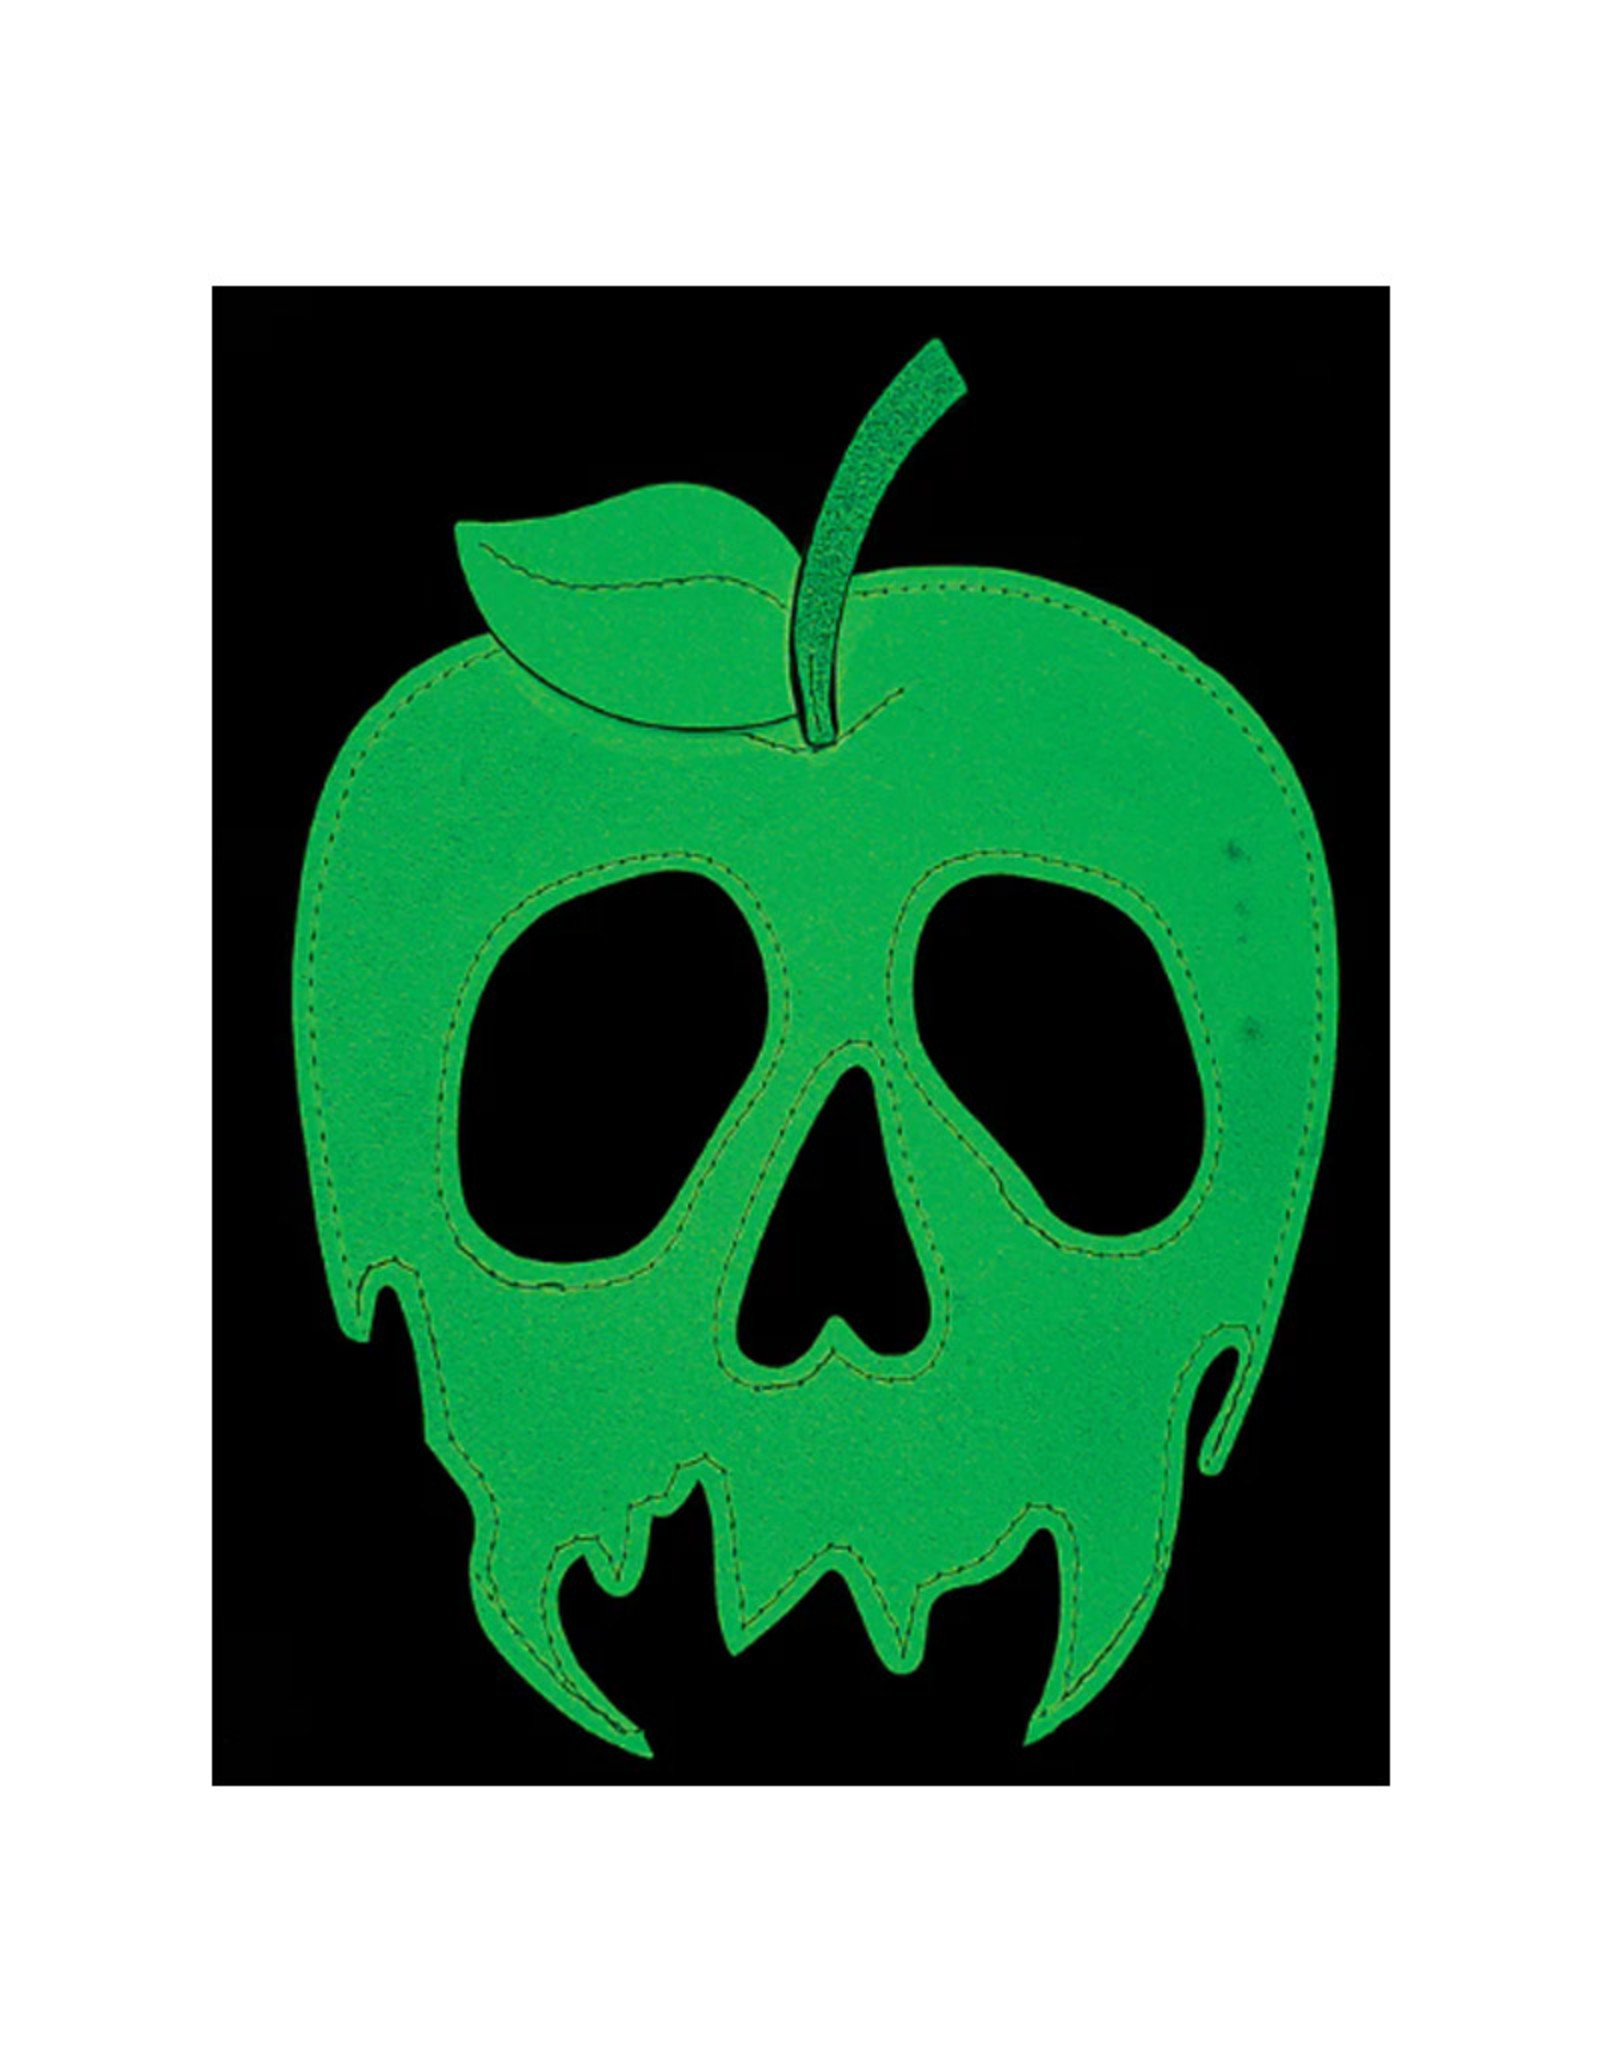 Comeco Glow in the Dark Poisoned Apple Crossbody Bag #82181